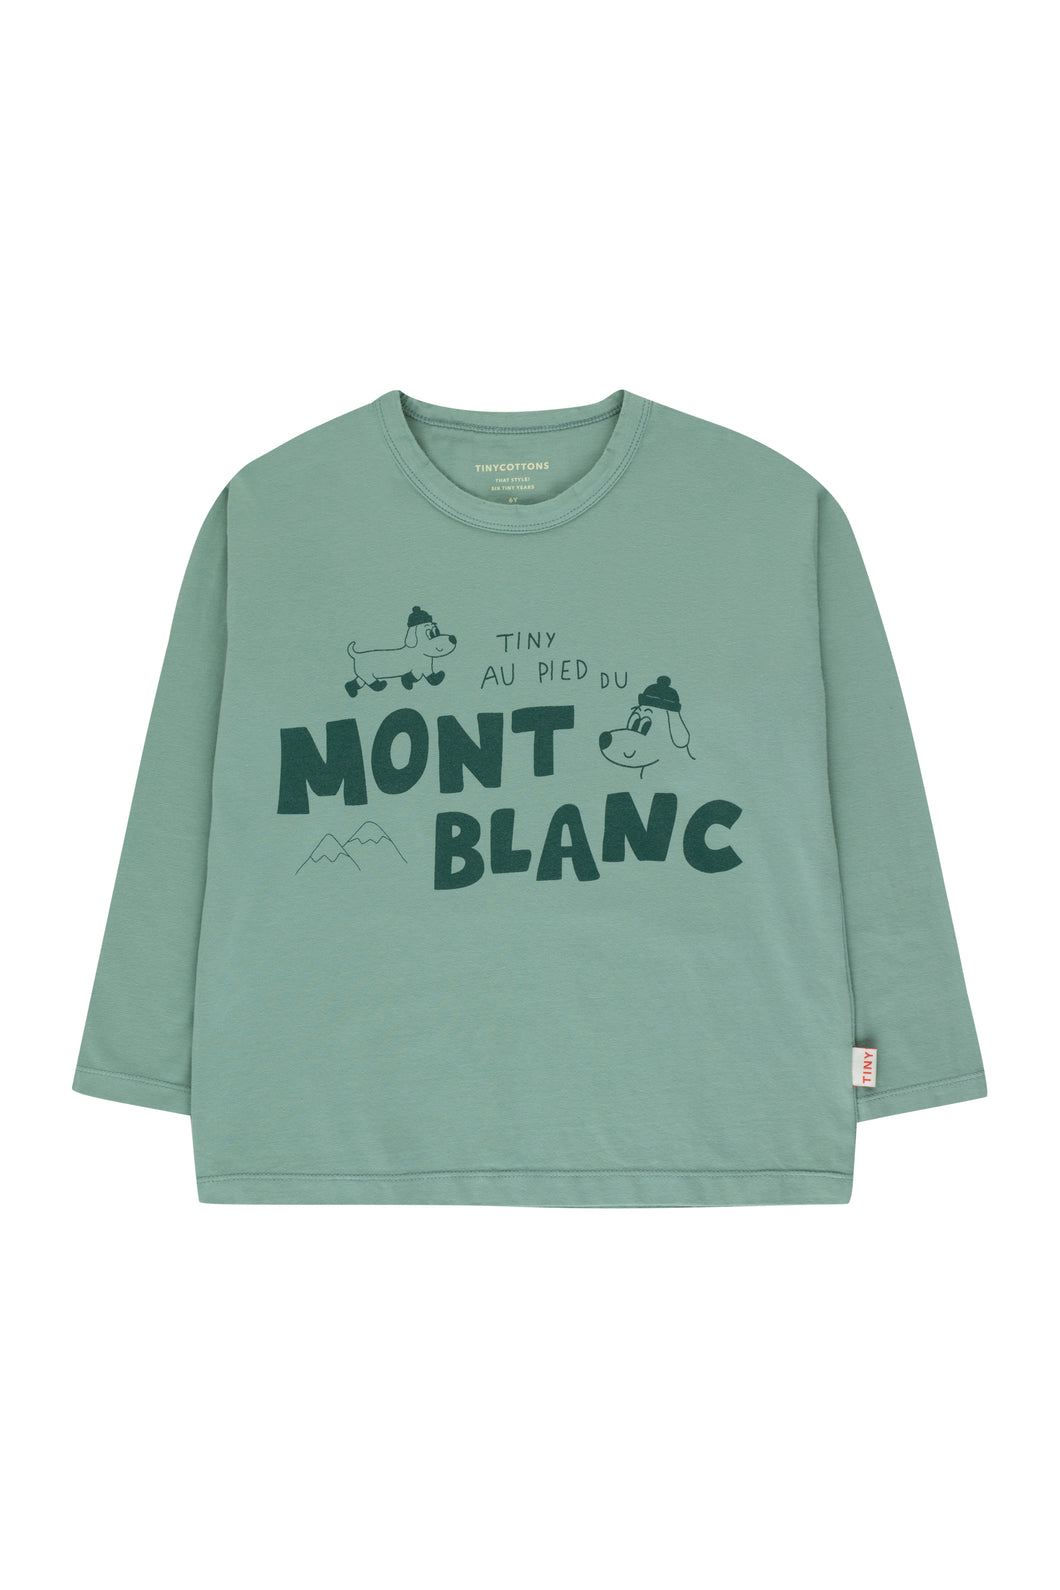 Mont Blanc Tee